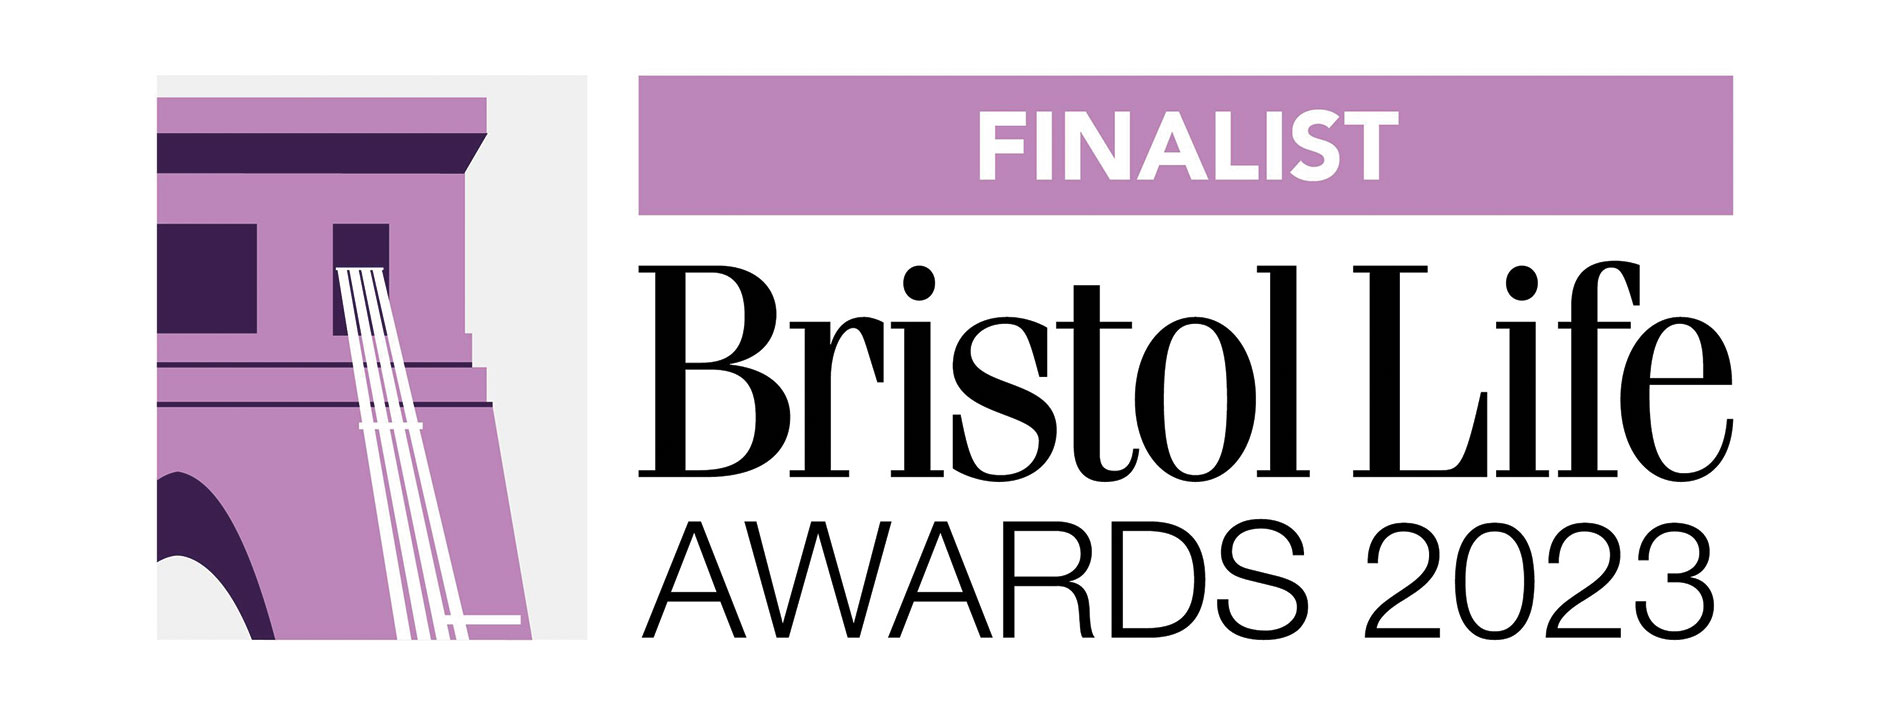 Bristol Life Awards 2023 Finalists ZiaBia